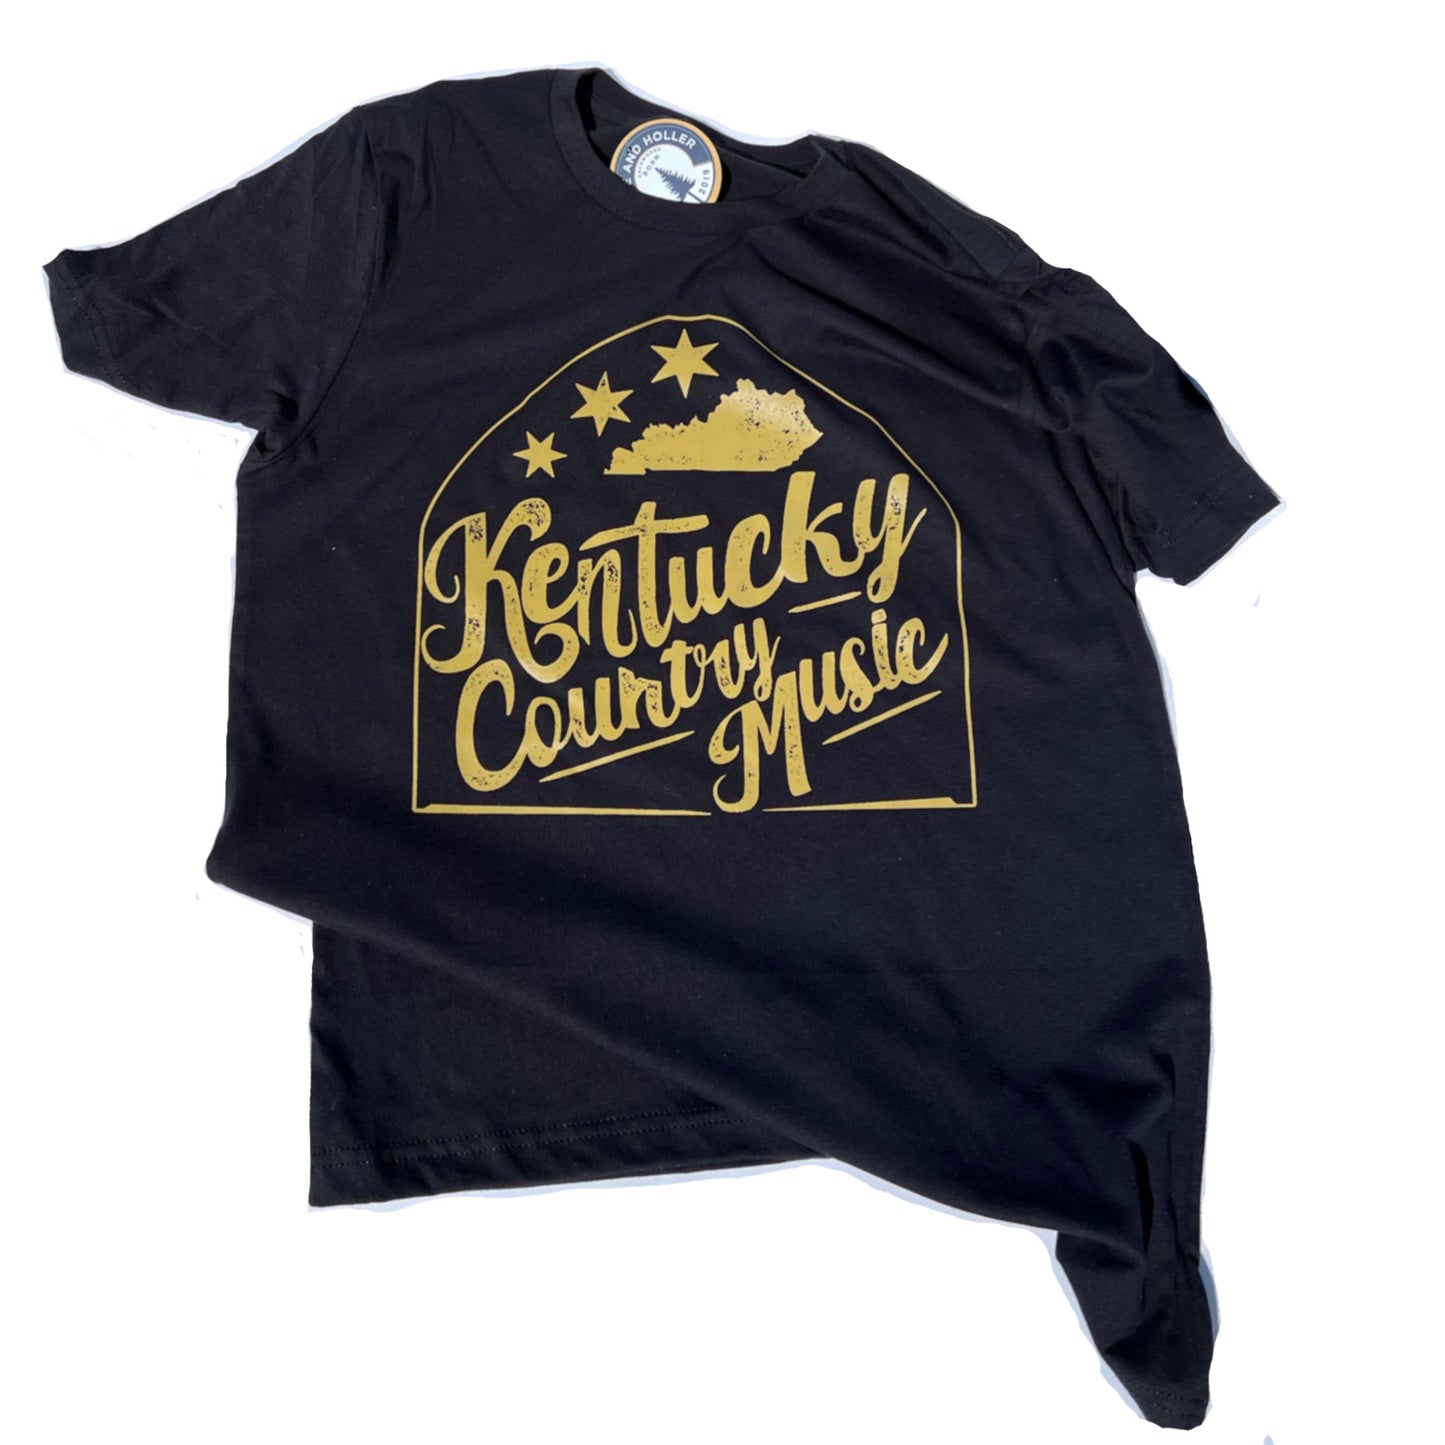 Kentucky Country Music tee